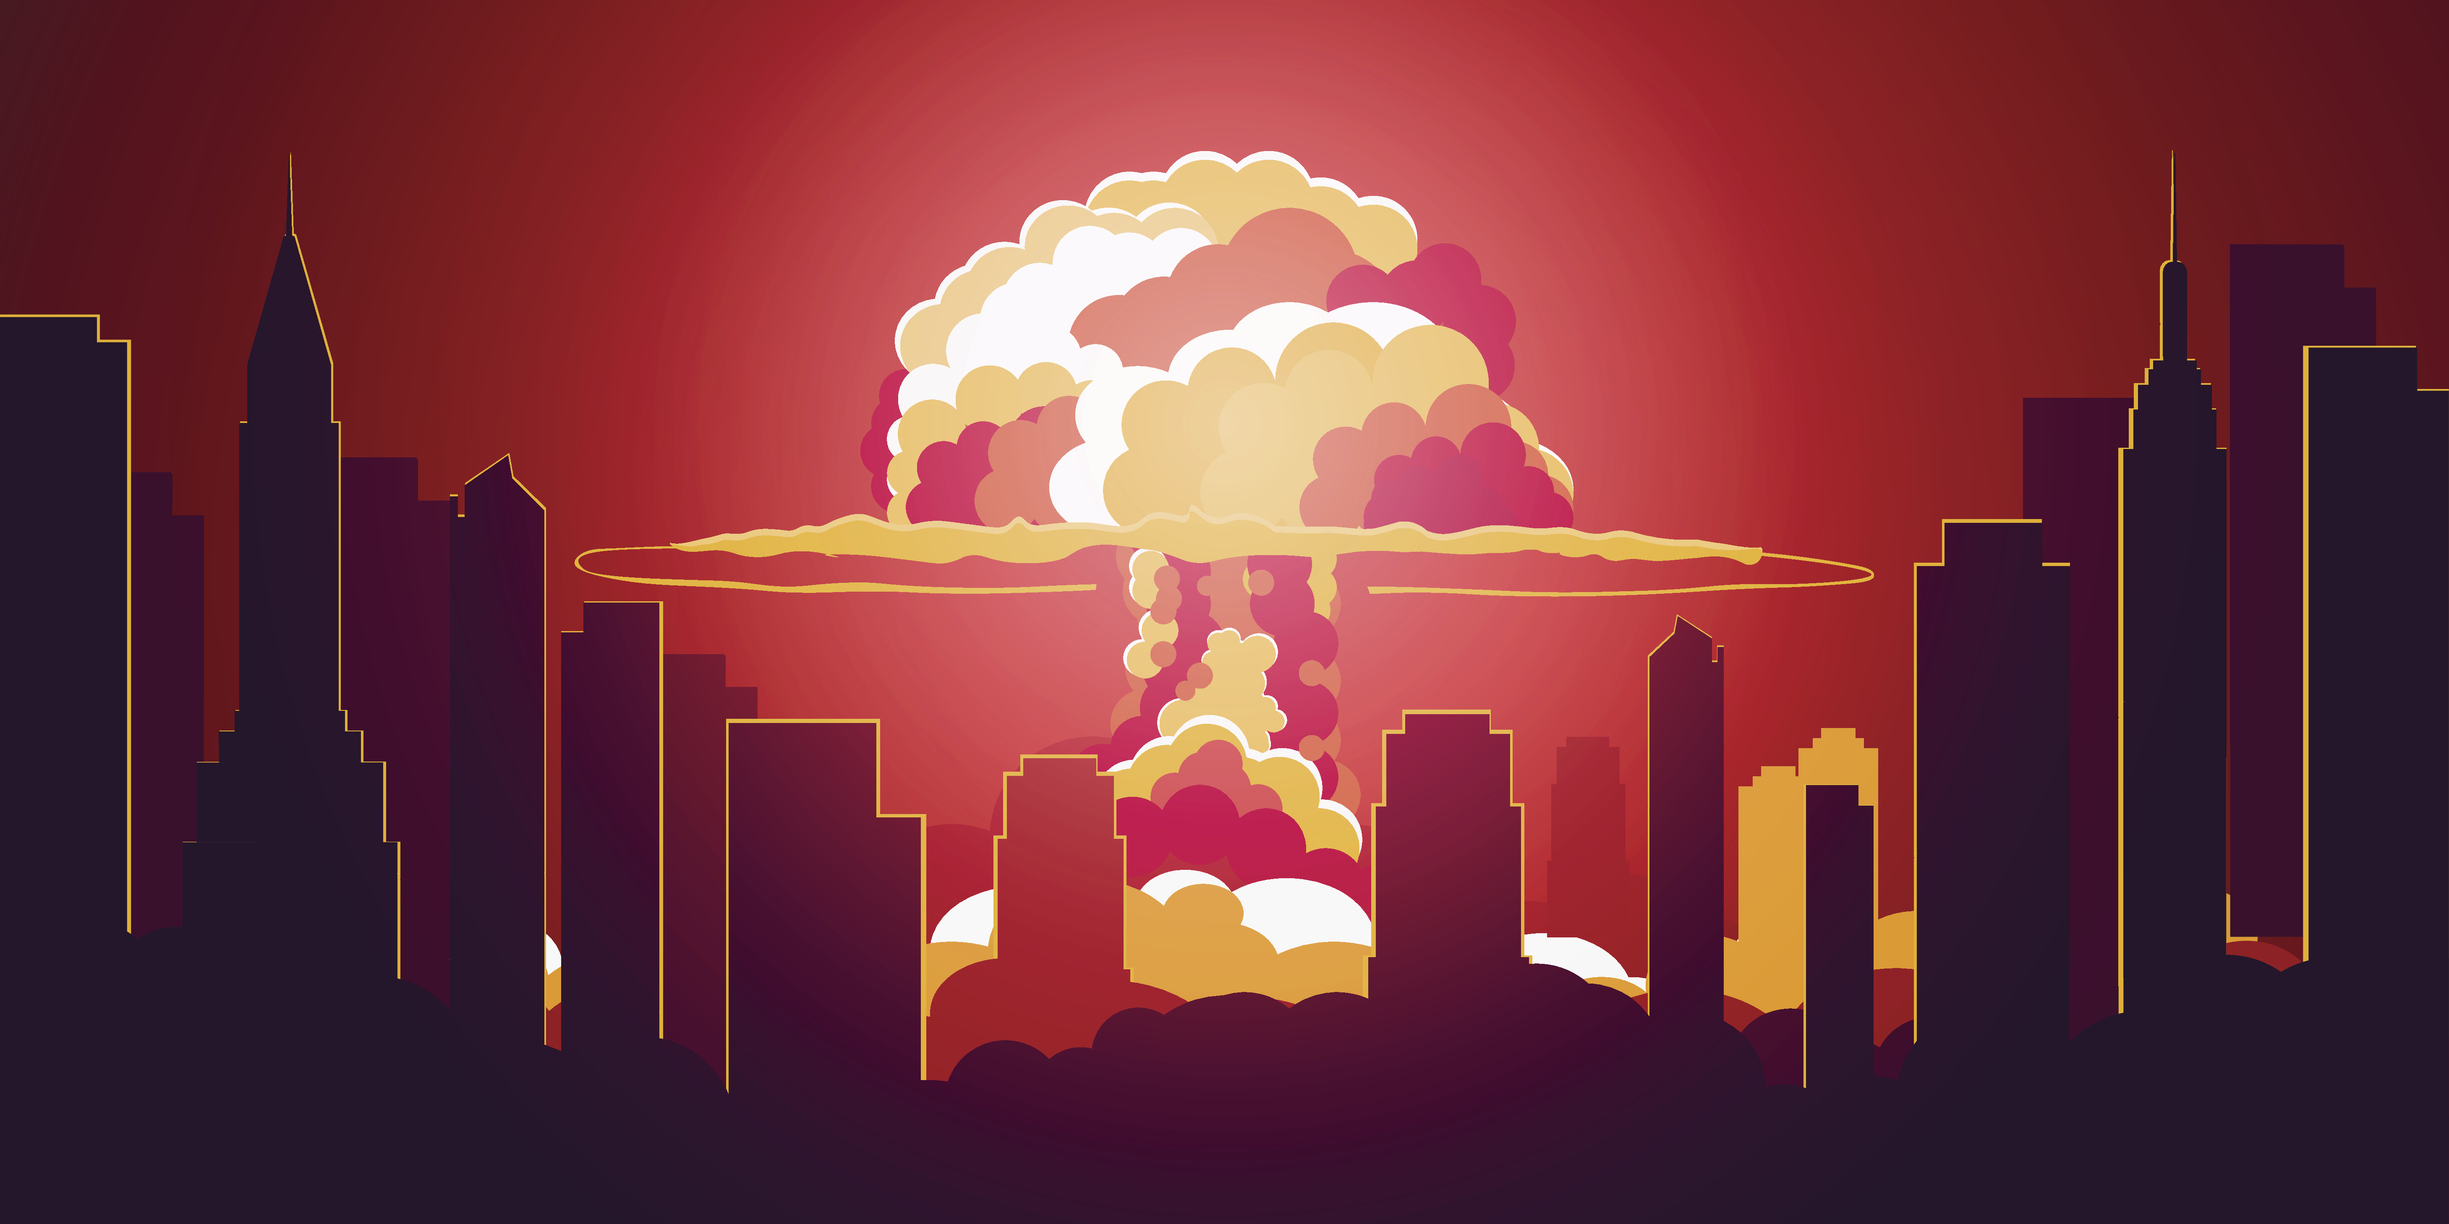 A nuclear explosion.